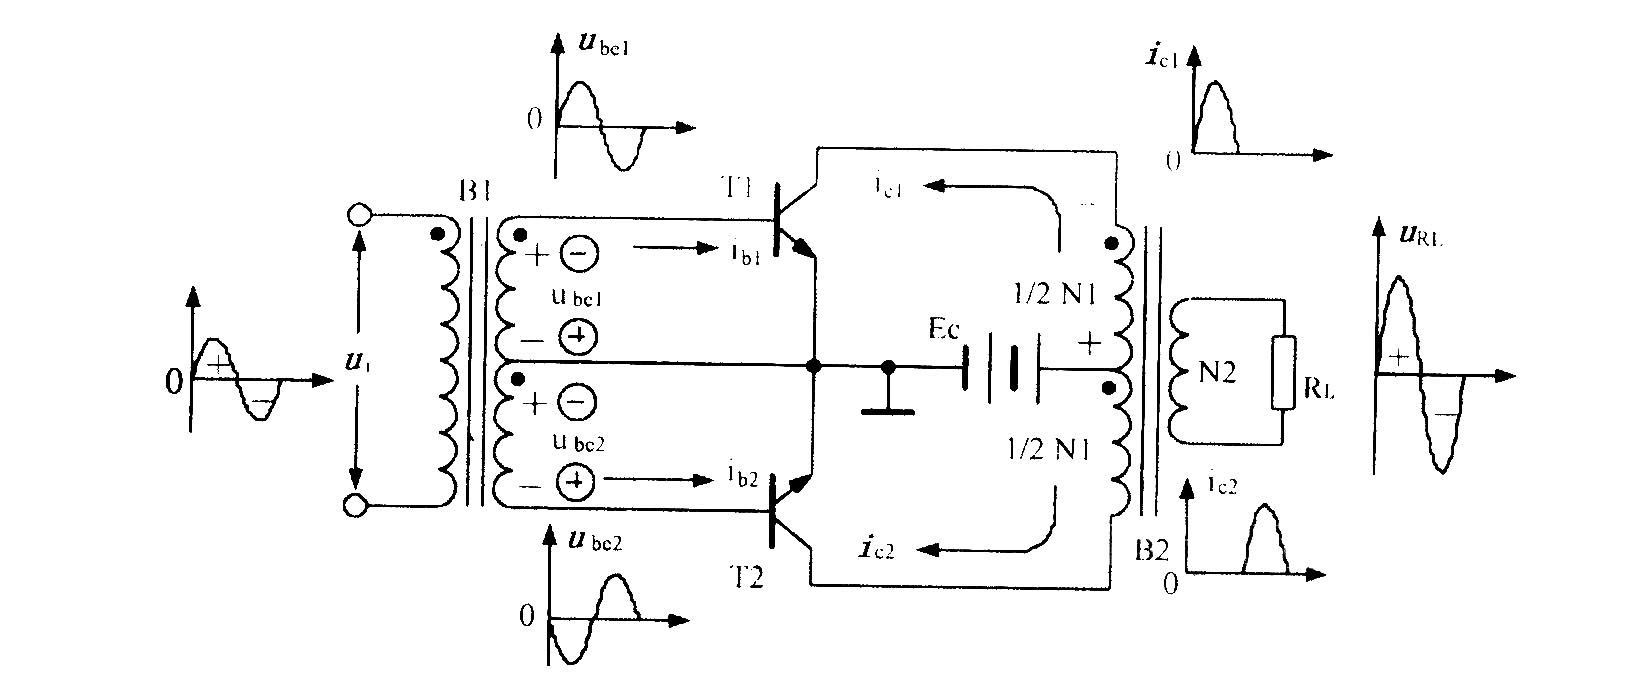 Push-pull power amplifier circuit diagram